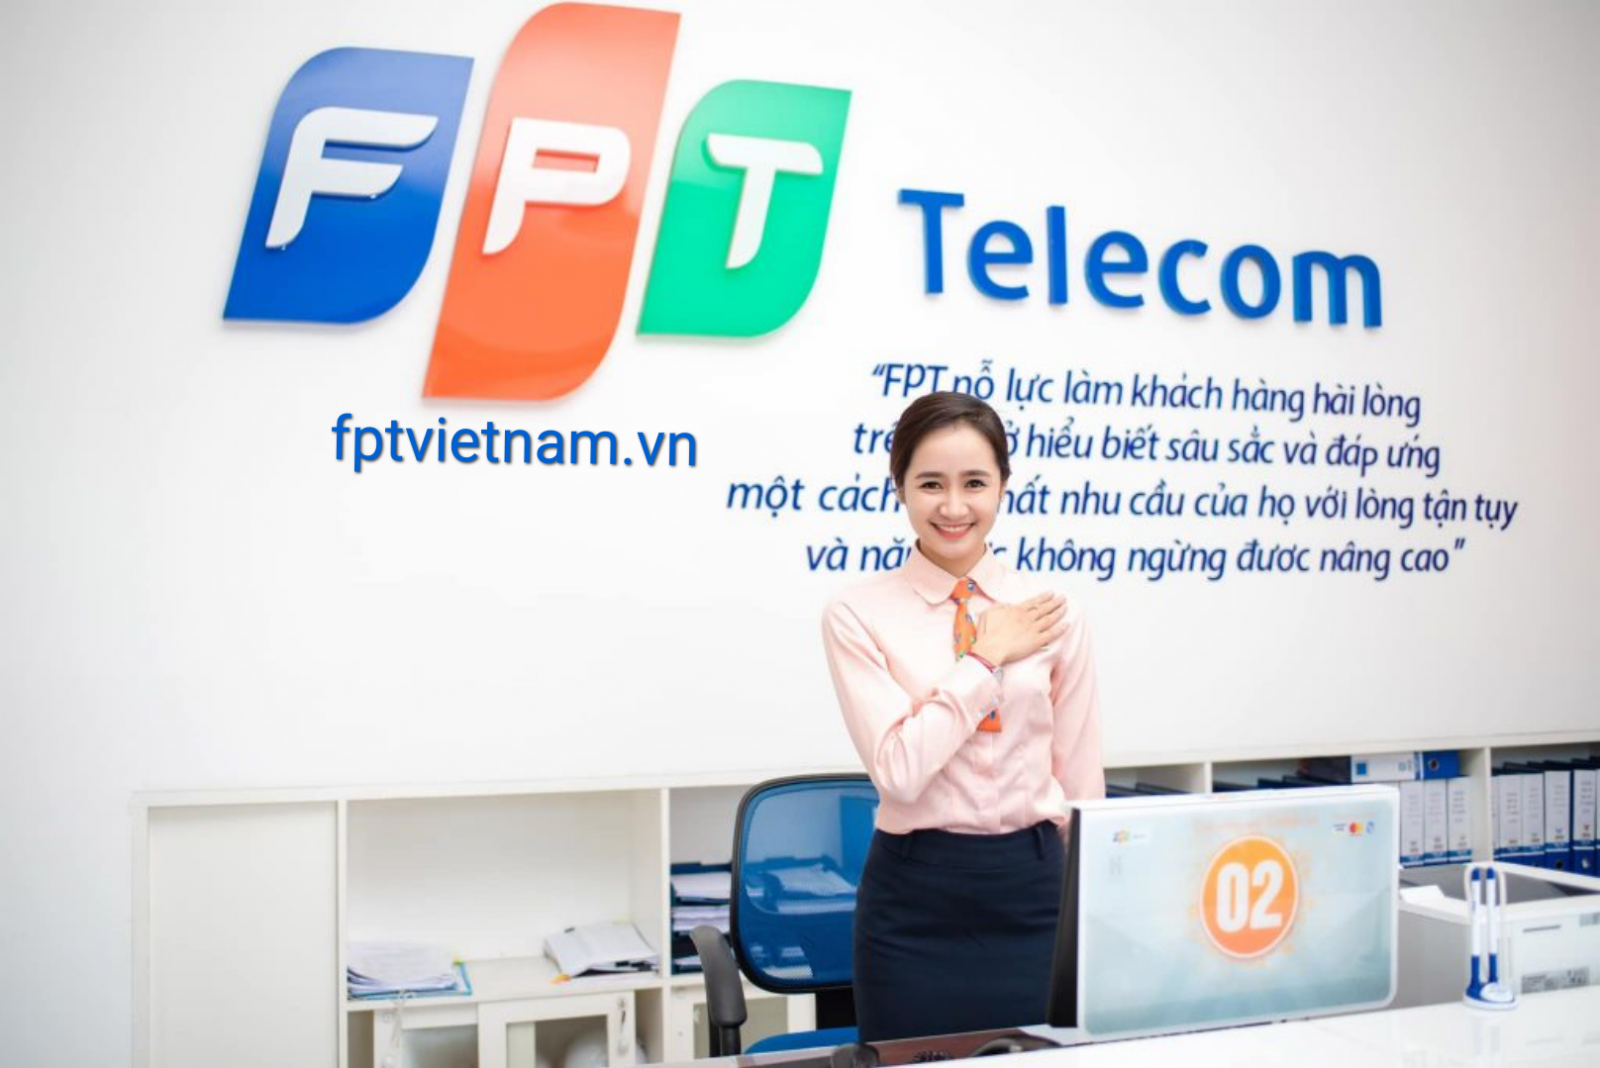 dịch vụ fpt telecom An Giang